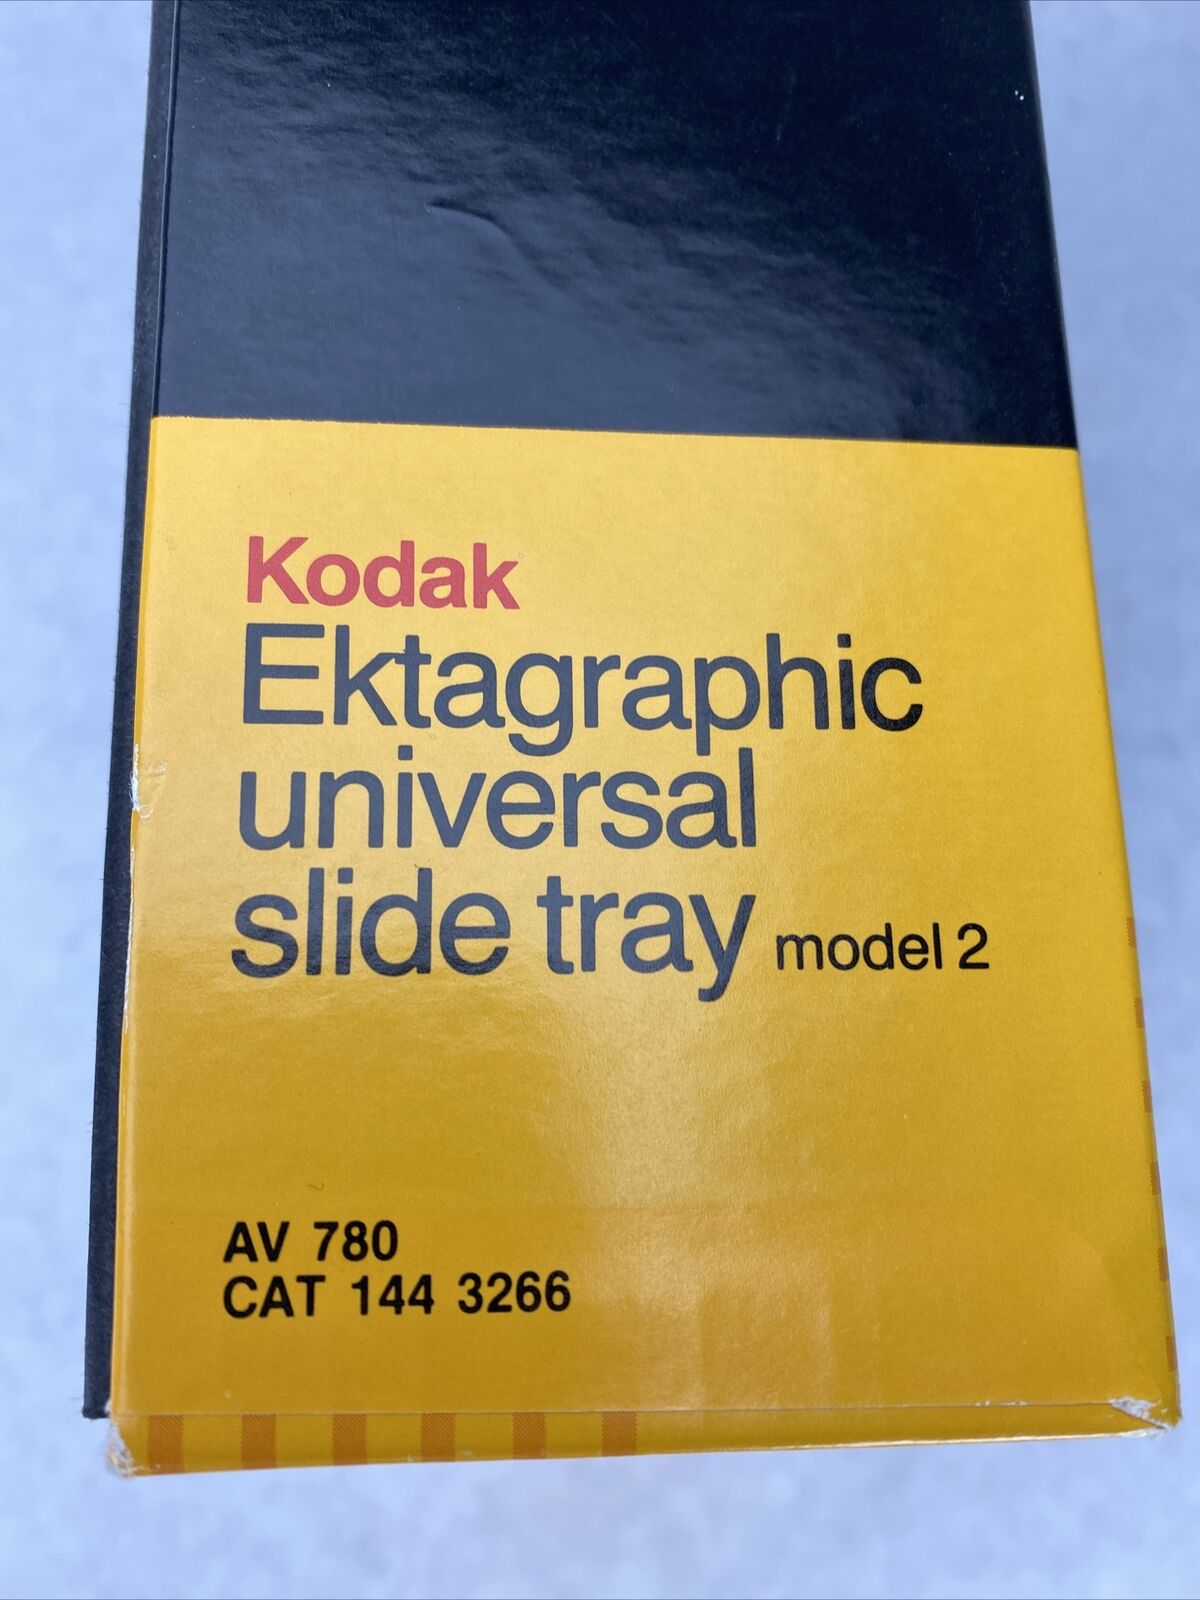 Kodak 144 3266 Ektagraphic Universal Slide Tray Model 2 Holds 80 2" x 2” slides